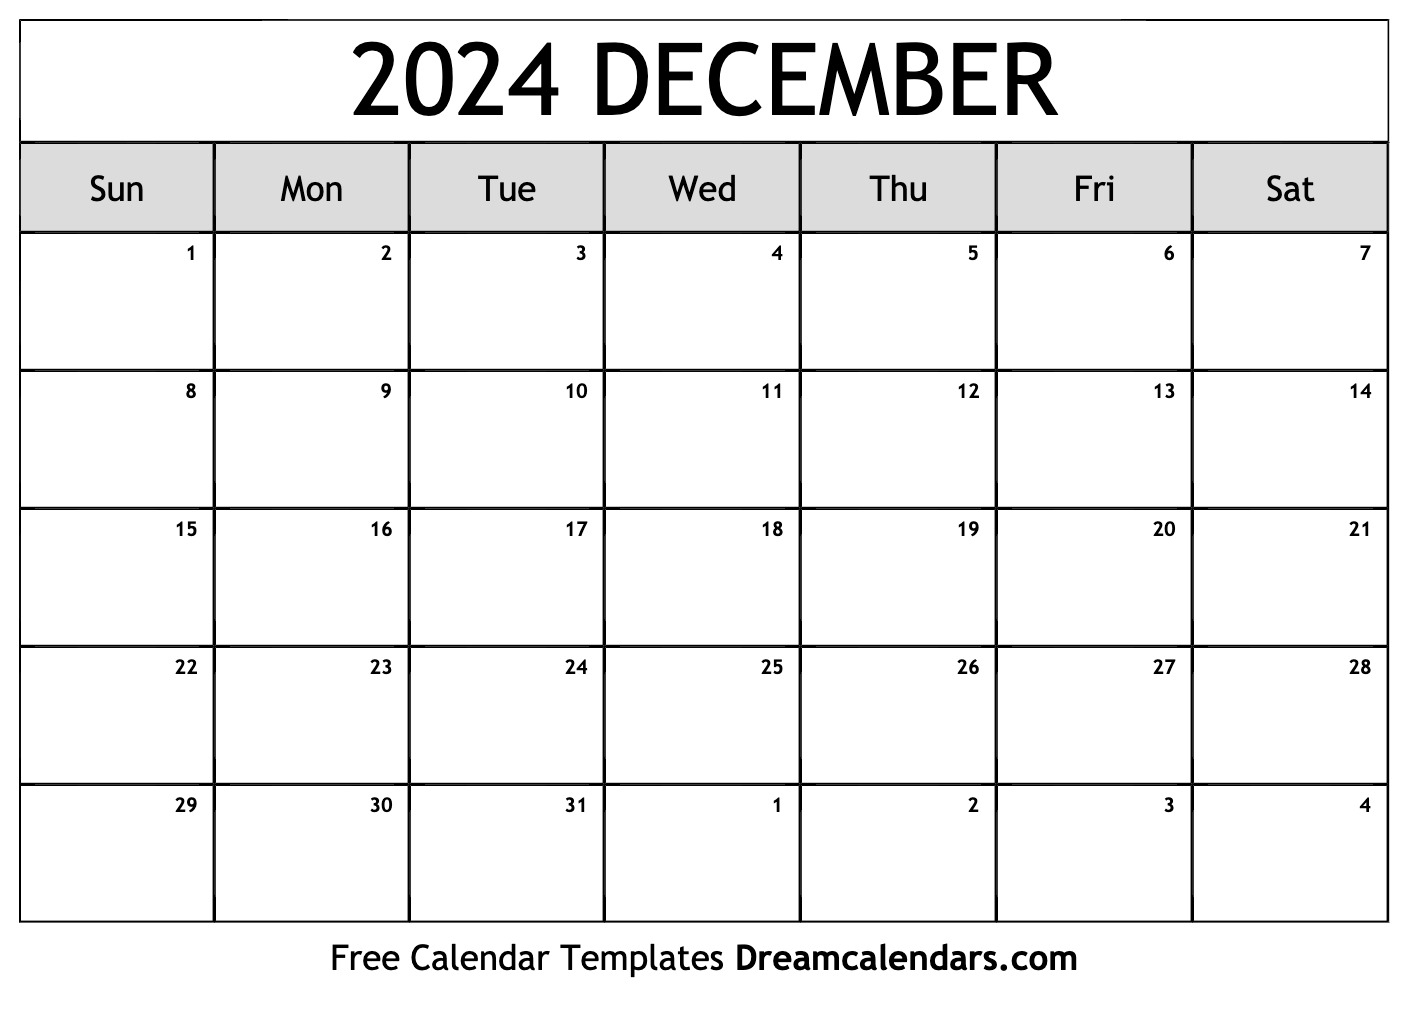 December 2024 Calendar | Free Blank Printable With Holidays for Printable December 2024 Calendar With Holidays